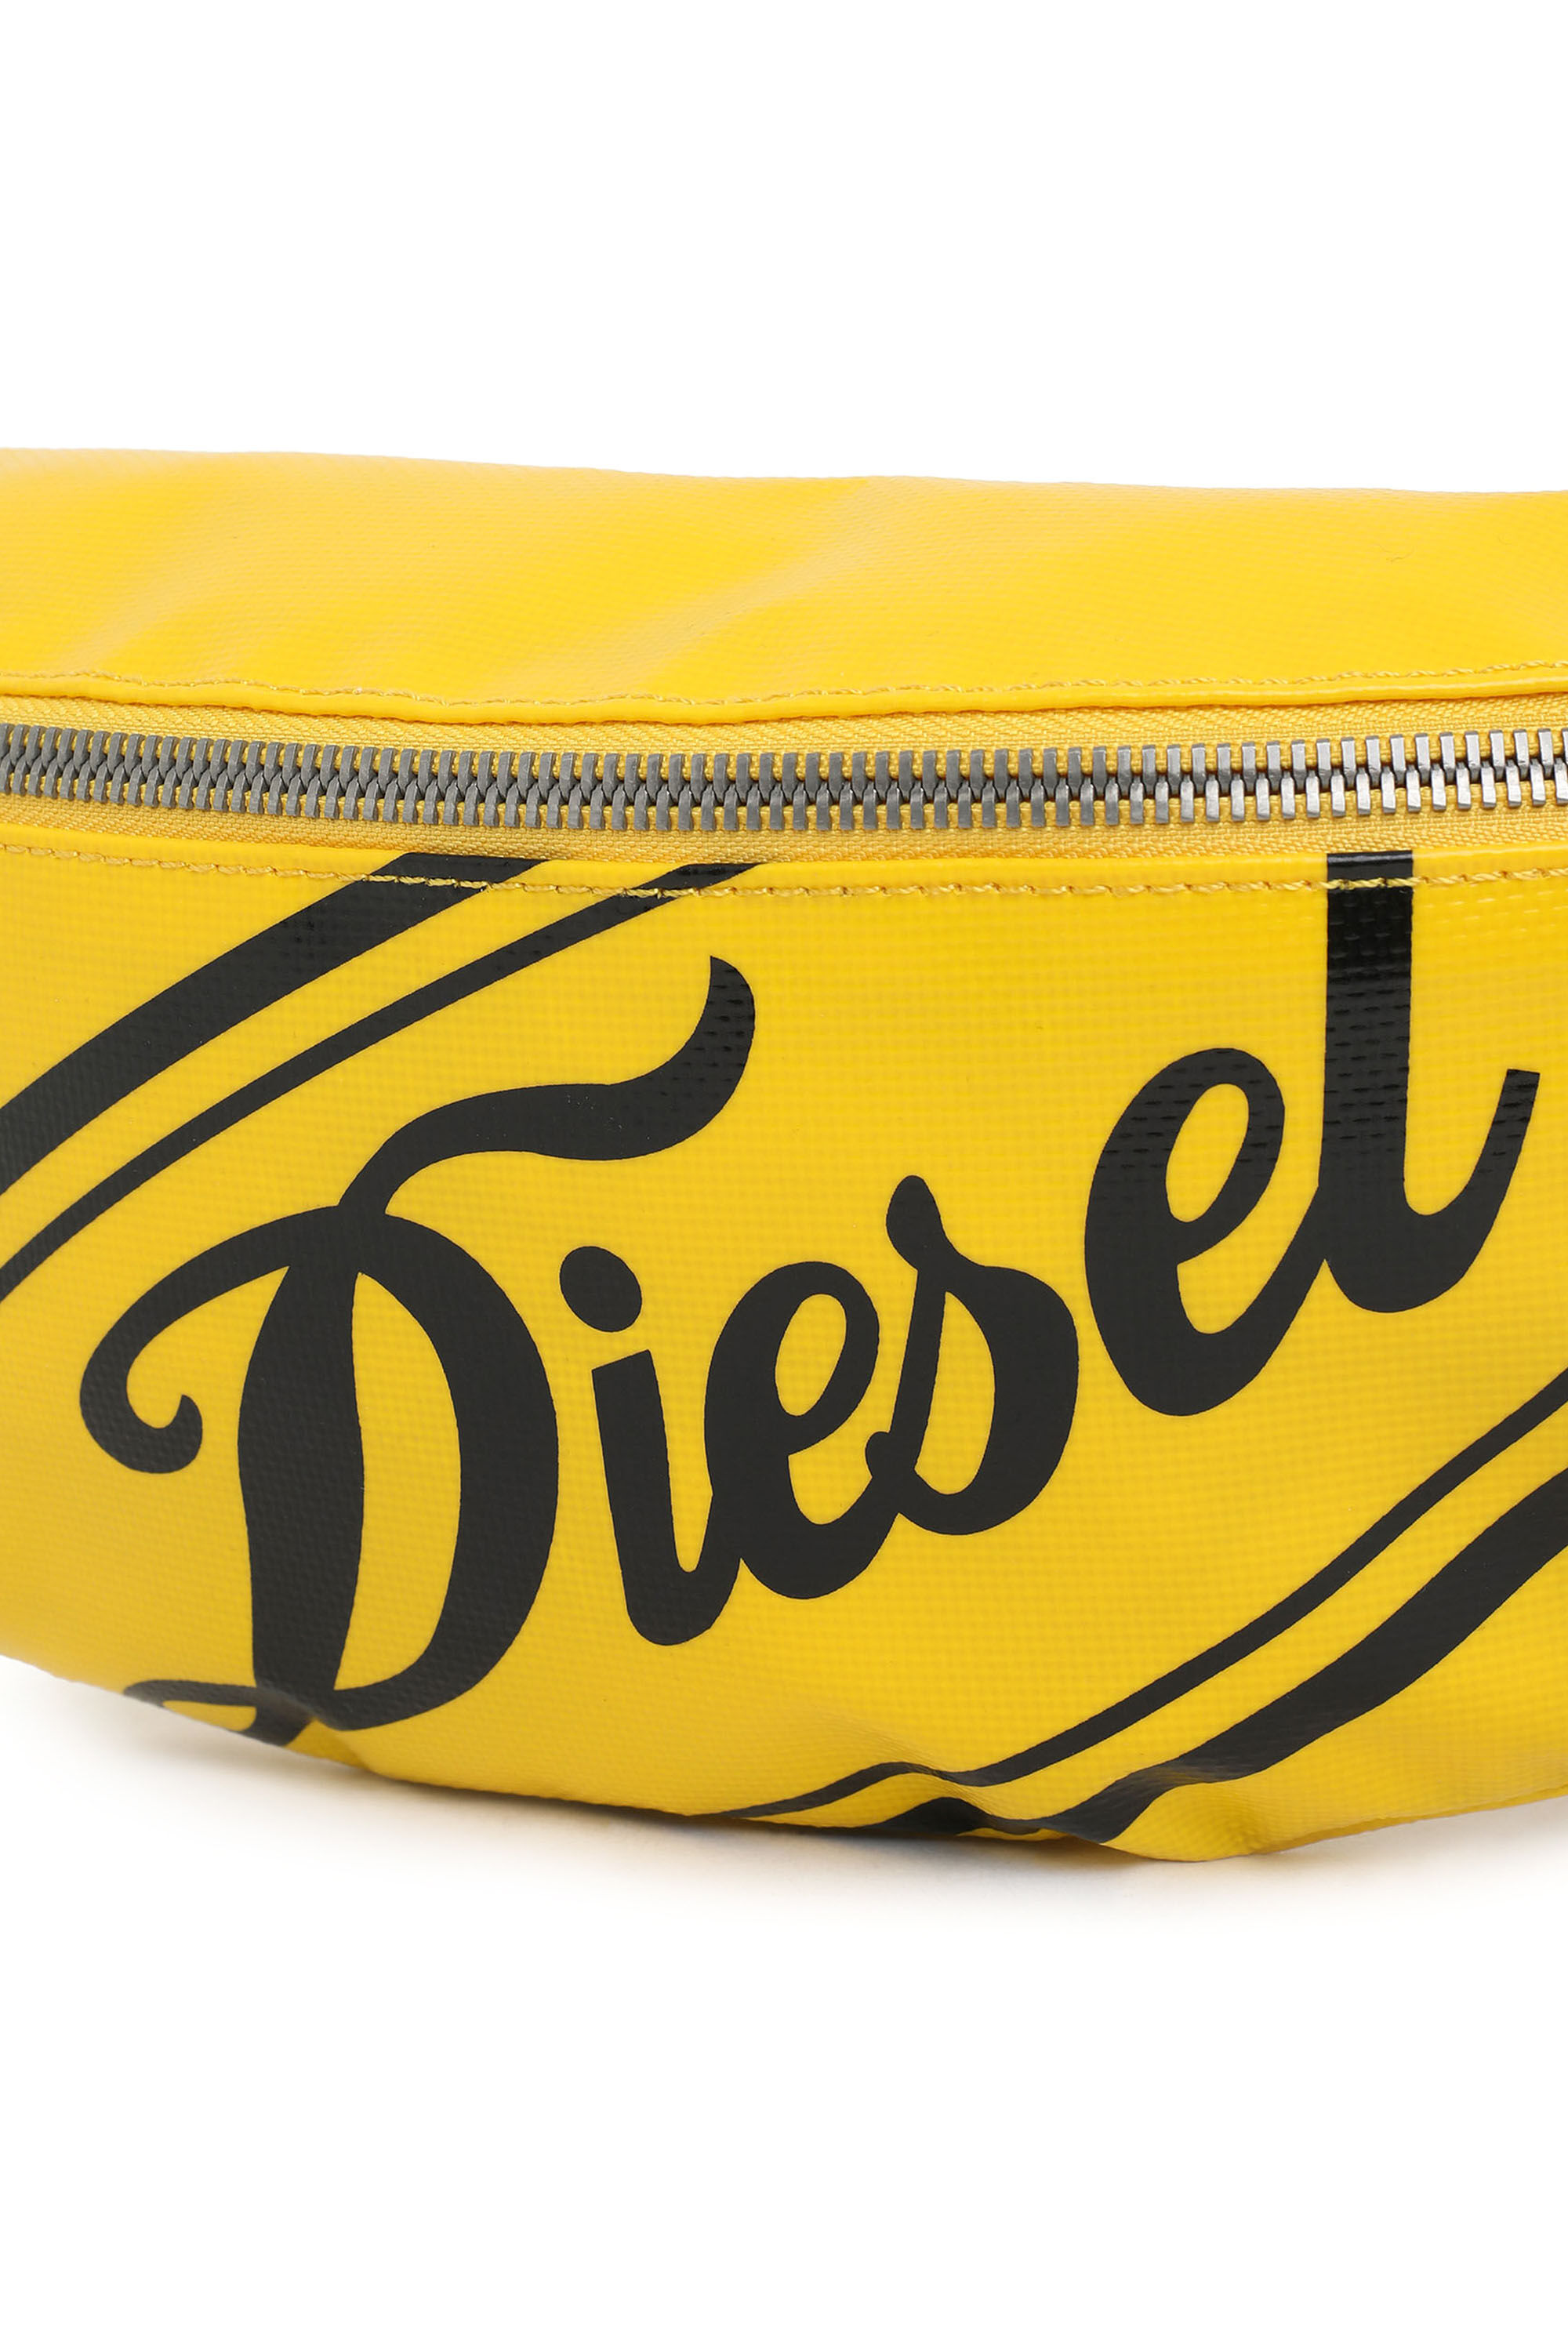 Diesel - ORFEI, Yellow - Image 4